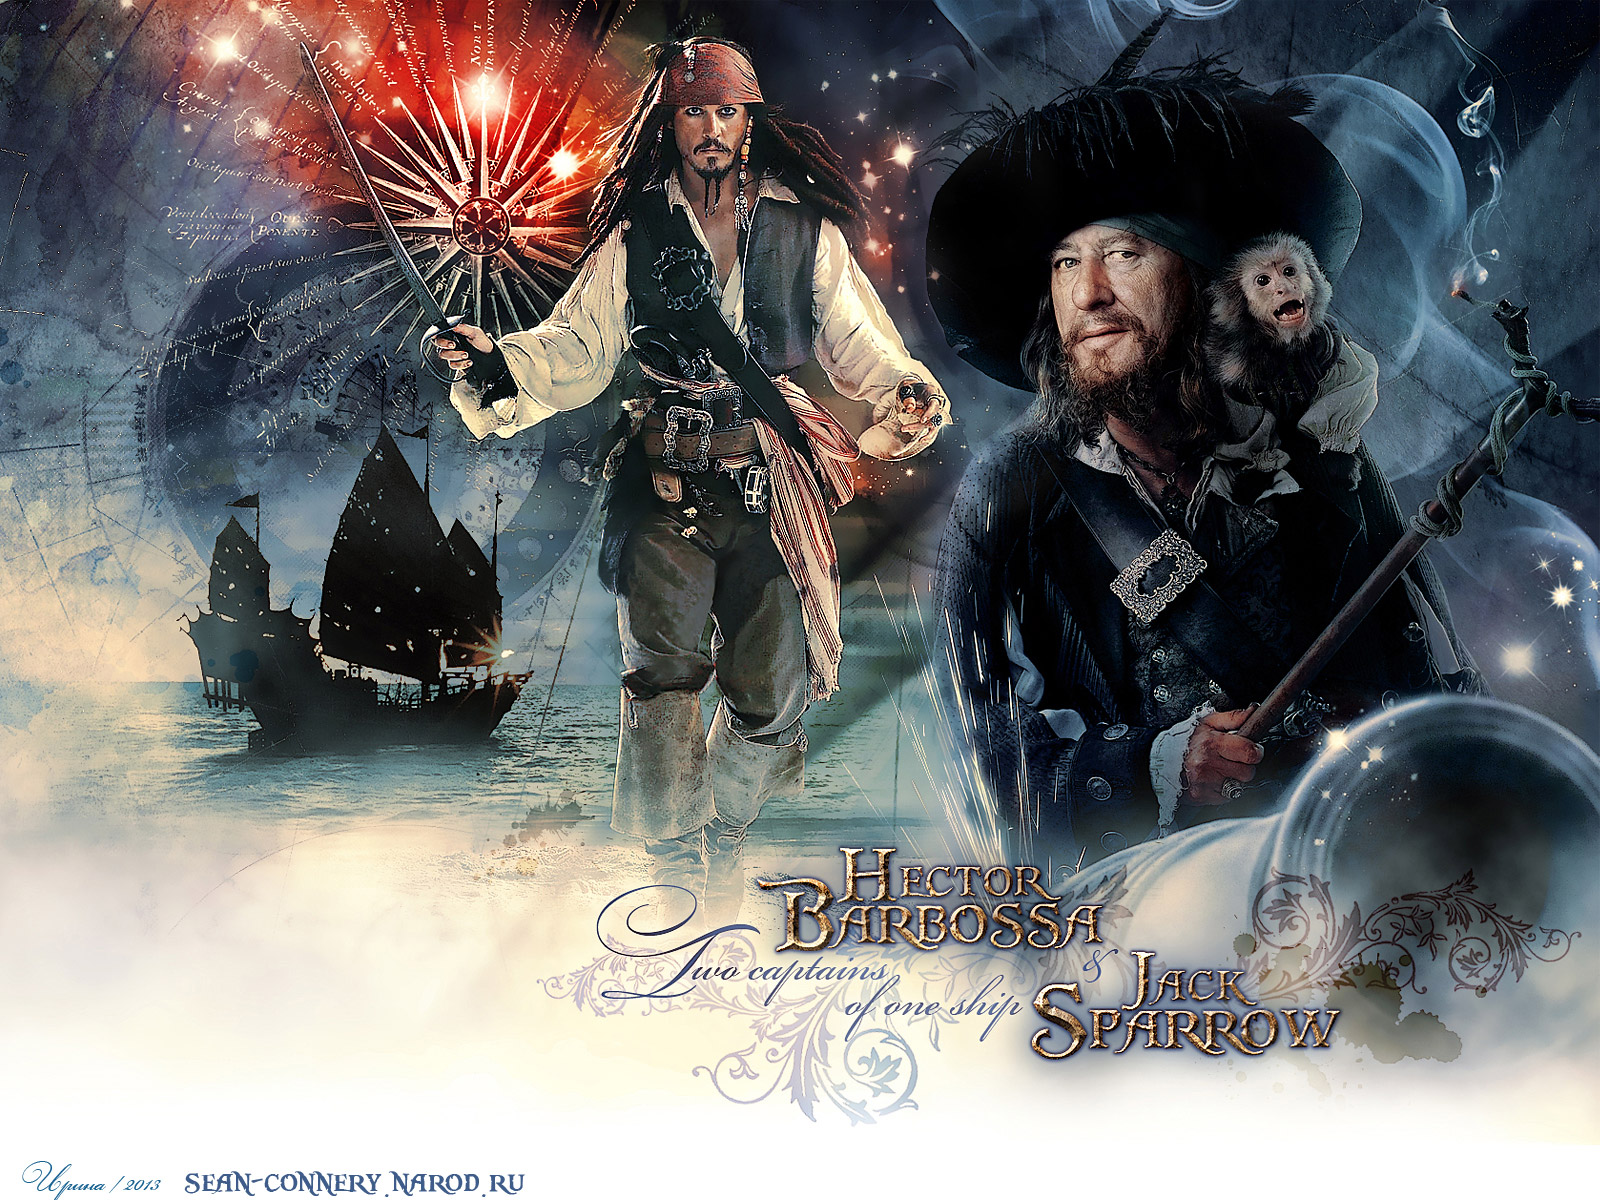     (Pirates of the Caribbean),   ,  , Jack Sparrow & Hector Barbossa,   (Johnny Depp)  Wallpaper